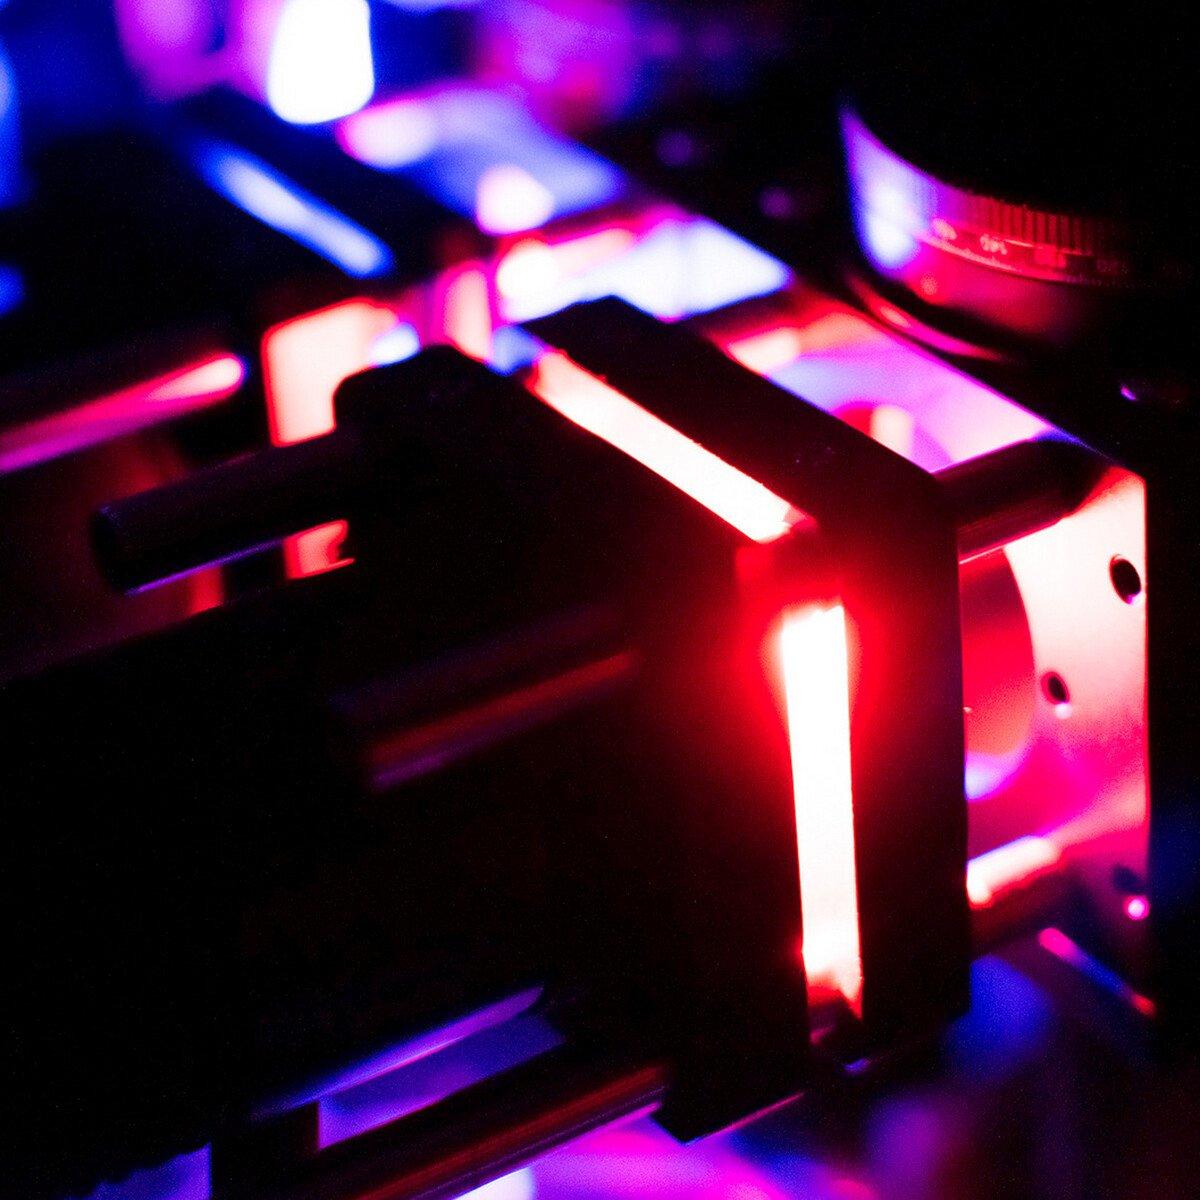 Close-up image of a light-emitting diode 